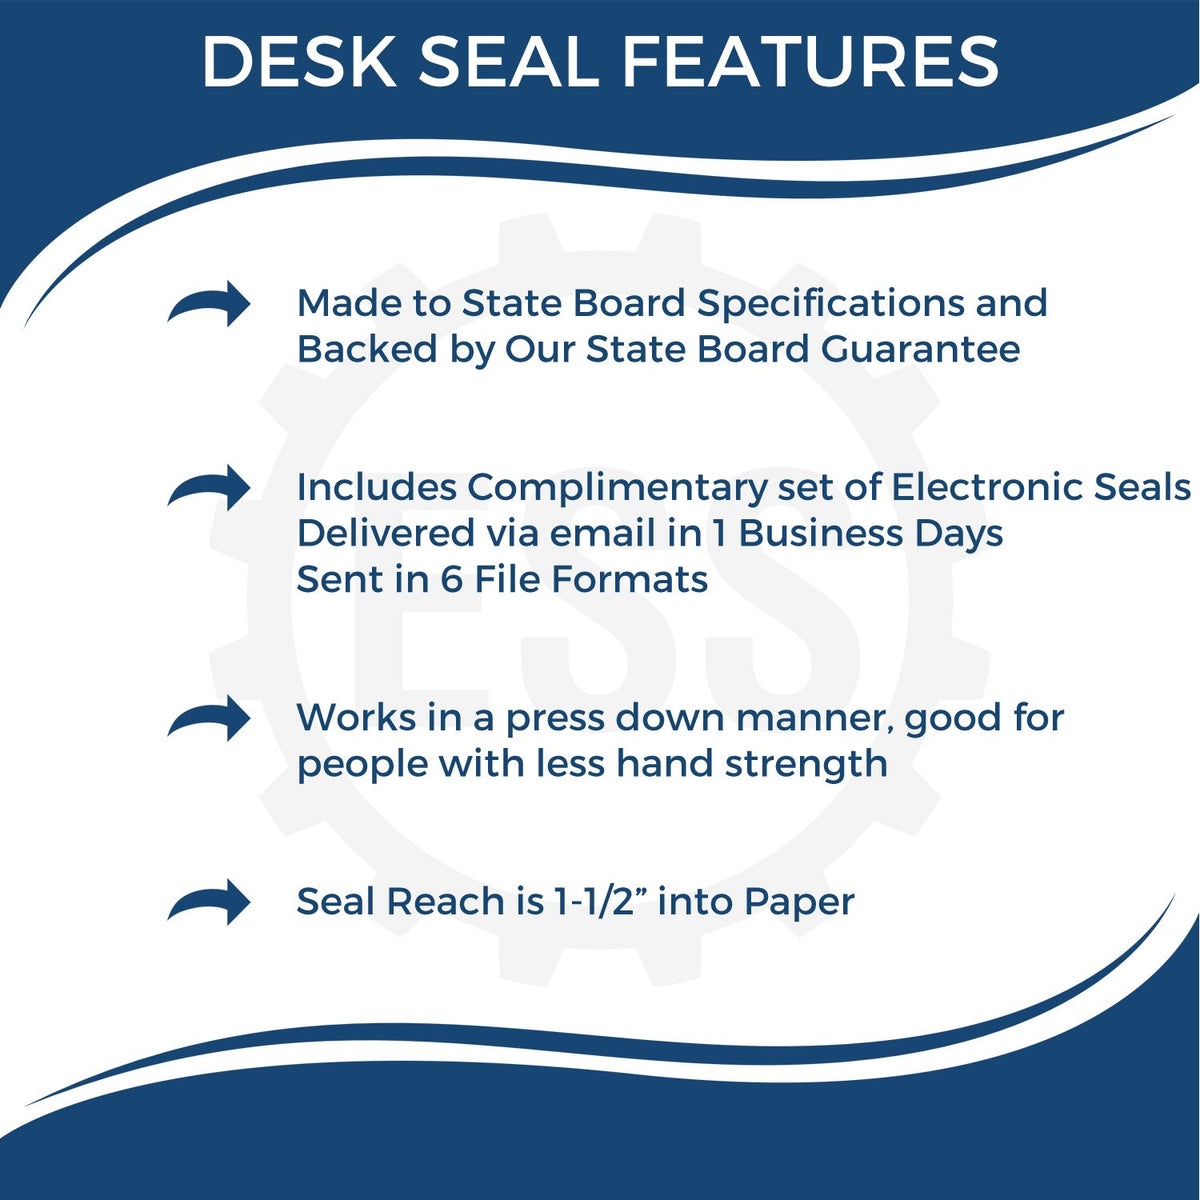 Nevada Engineer Desk Seal